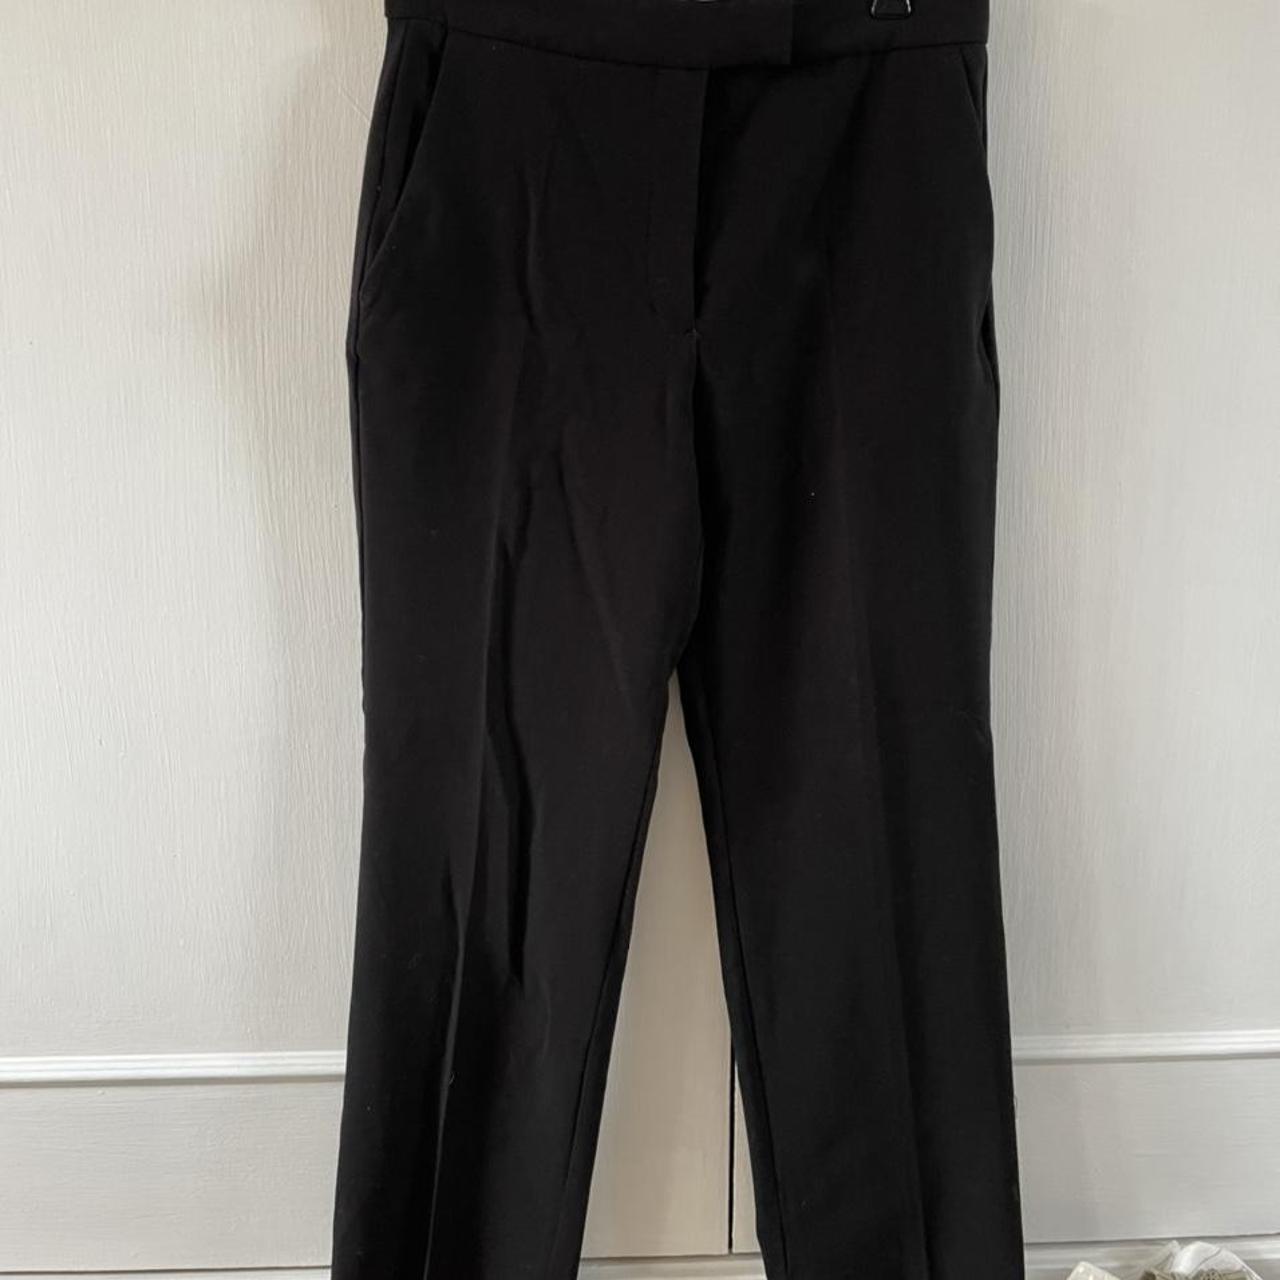 Mango Belted High Waist Trousers | eBay